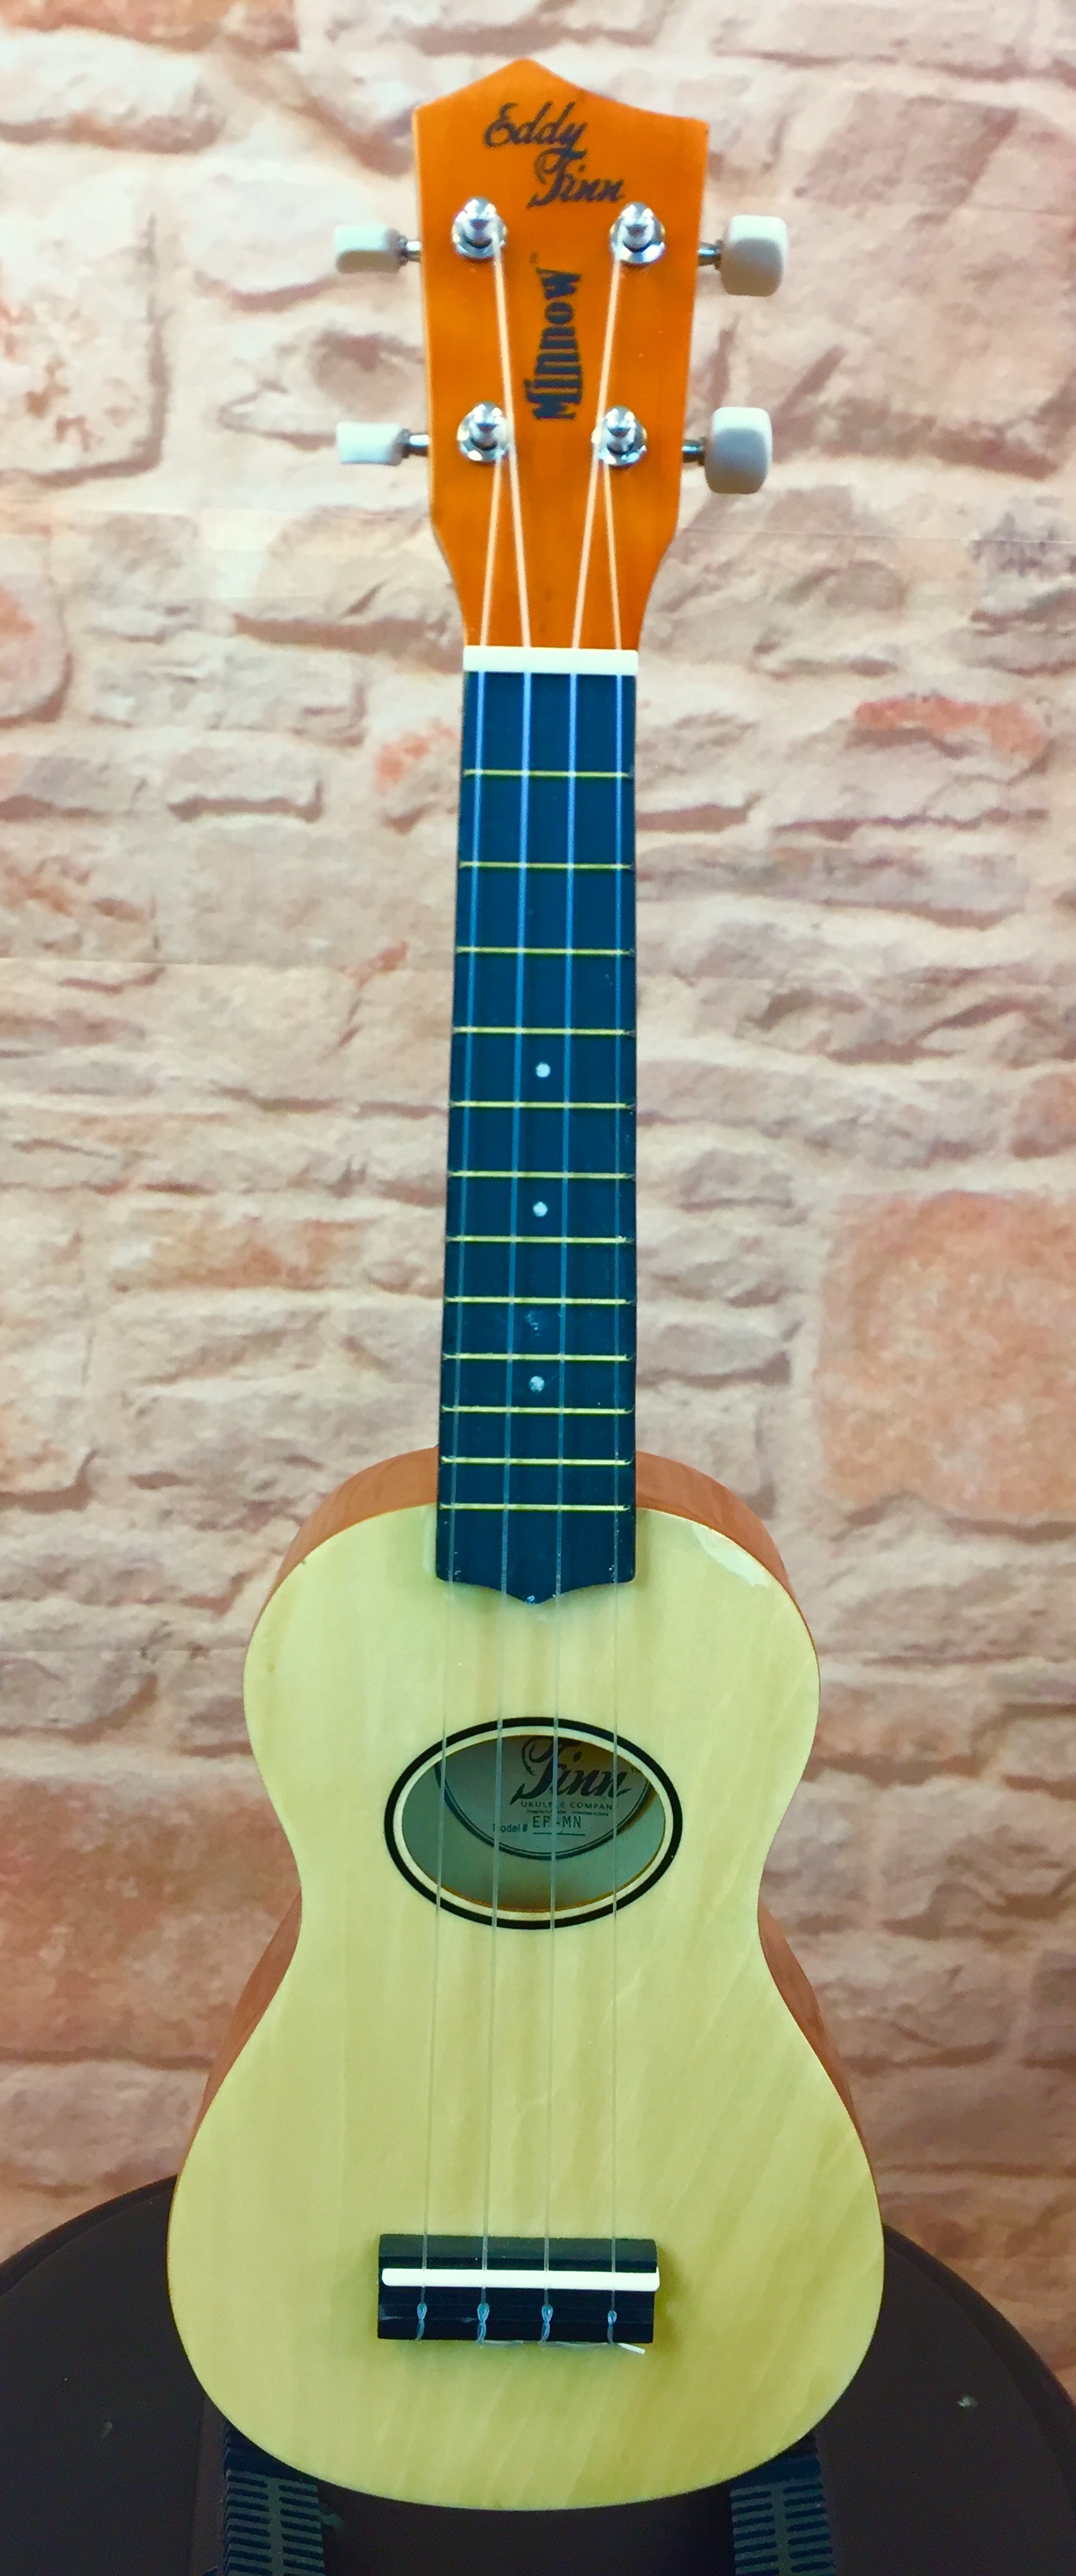 eddy finn minnow ukulele review